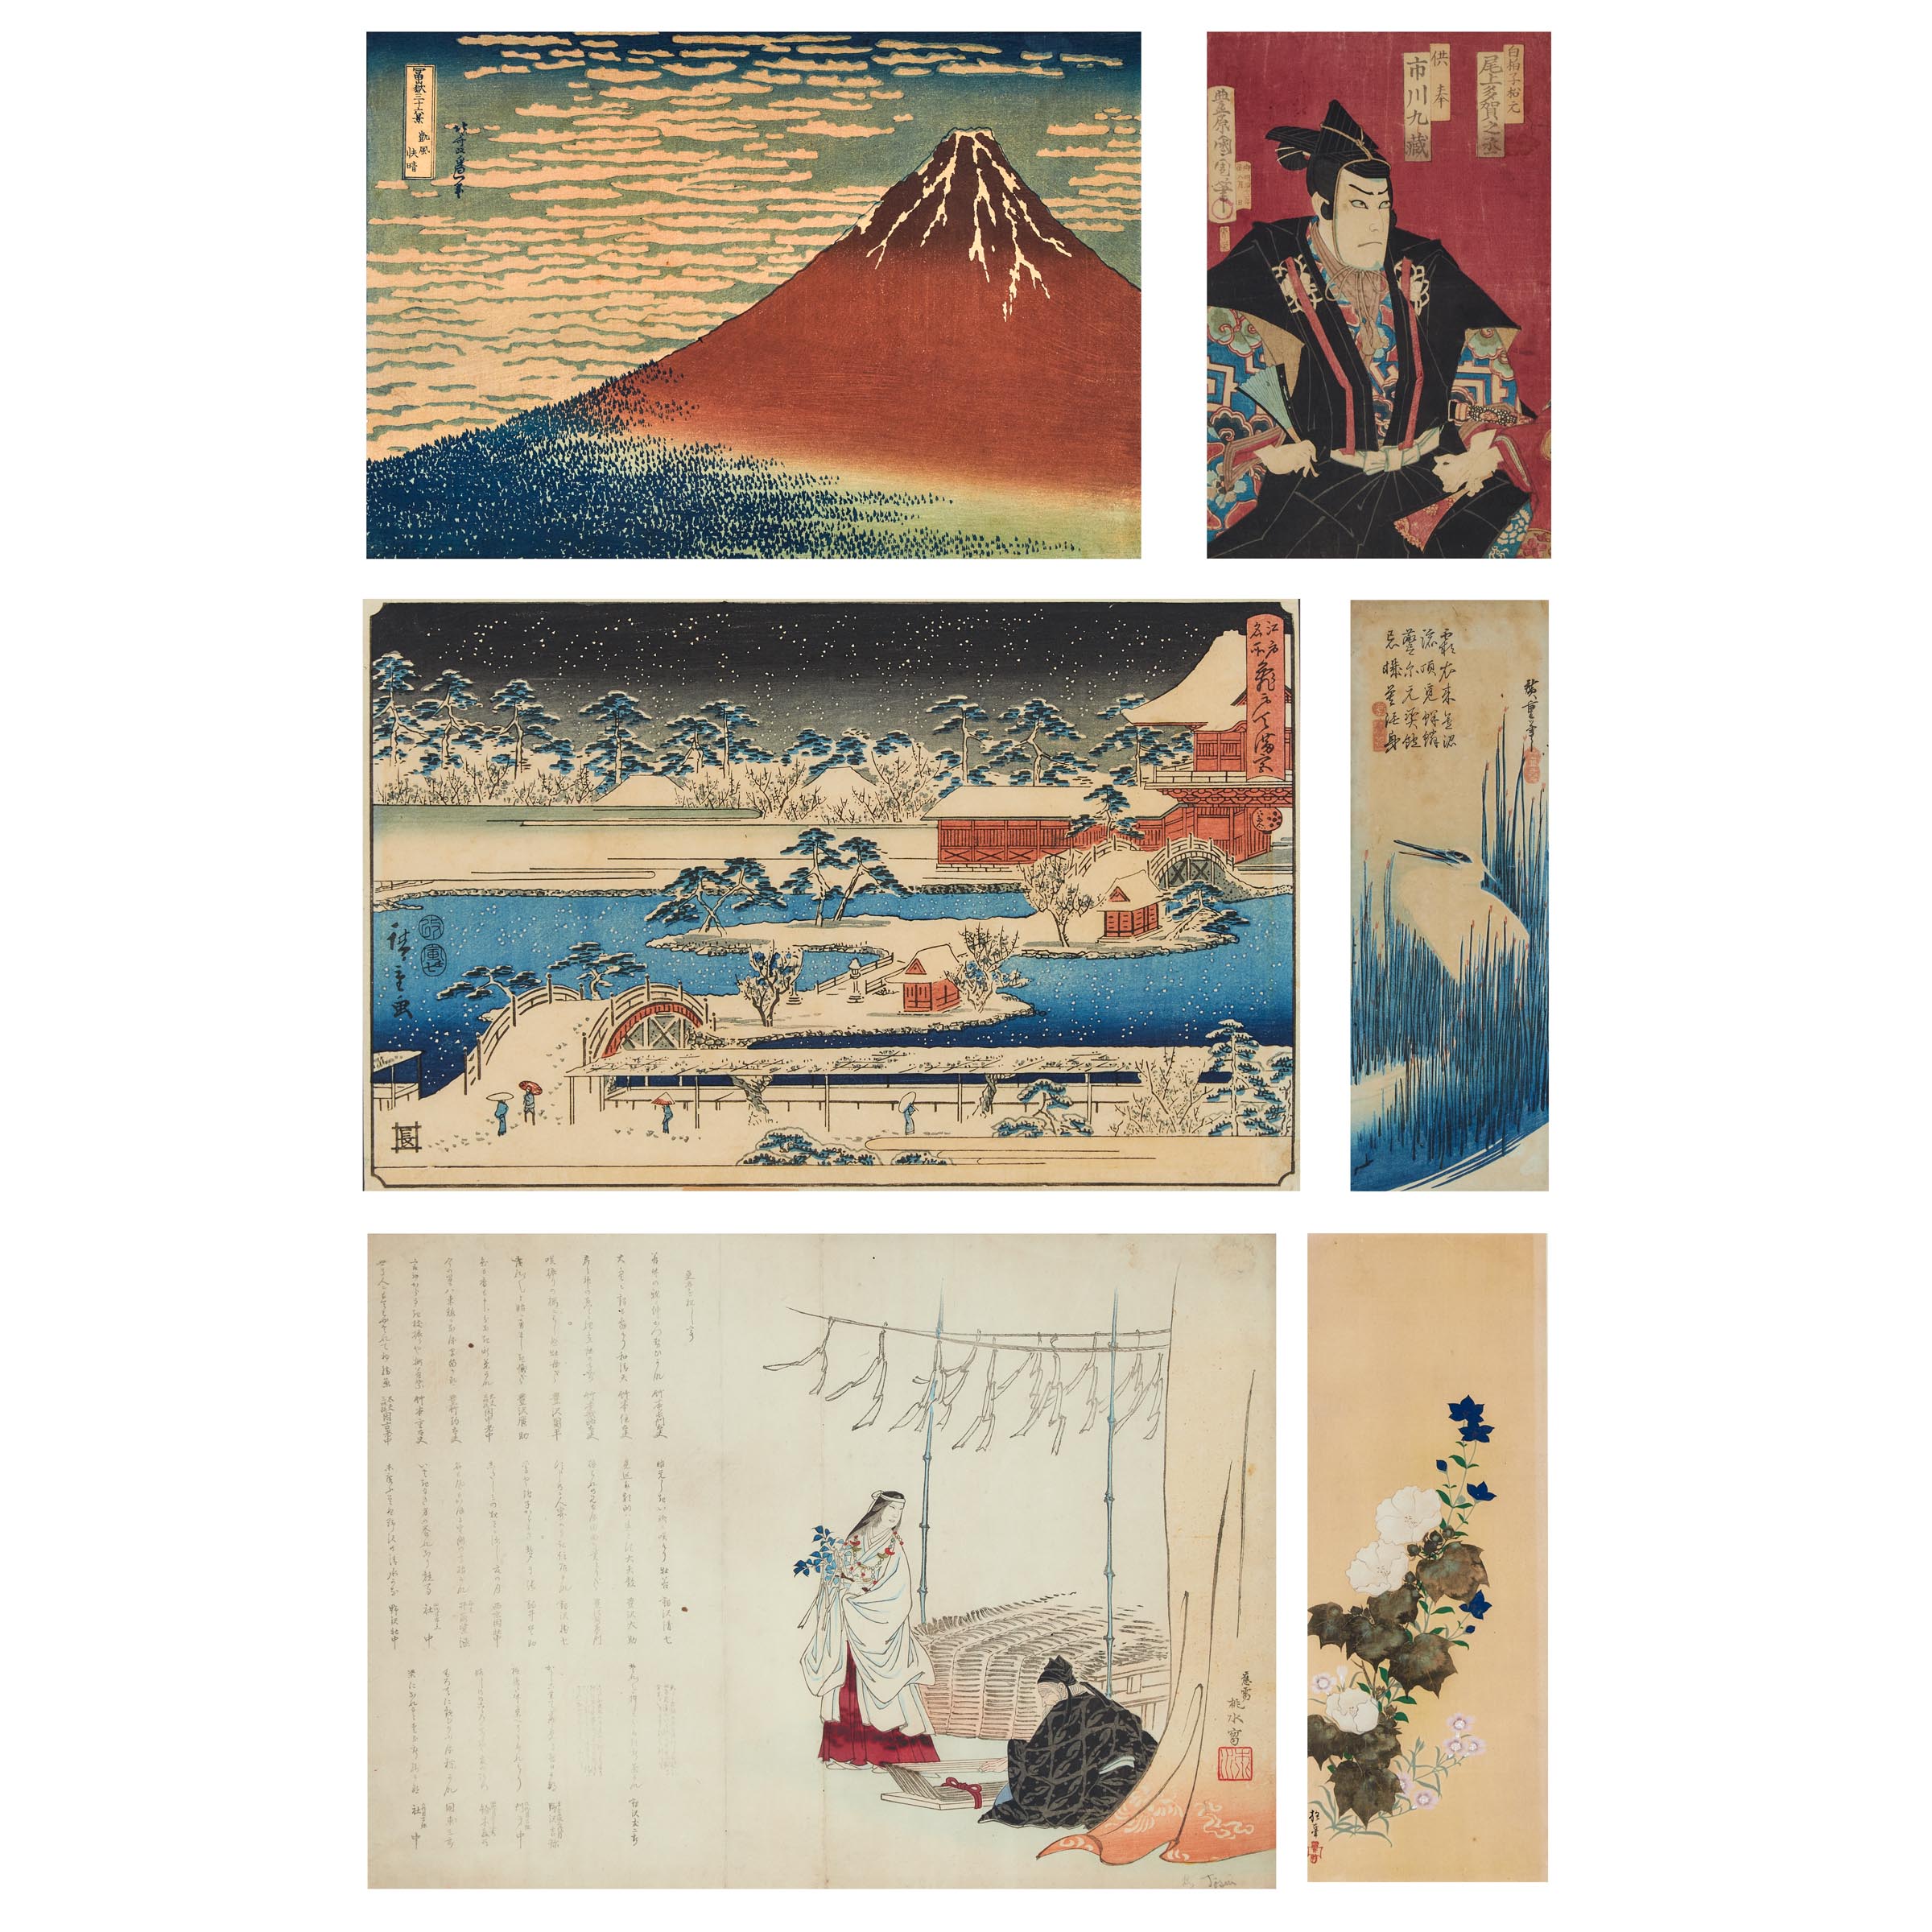 After Katsushika Hokusai (1760-1849),